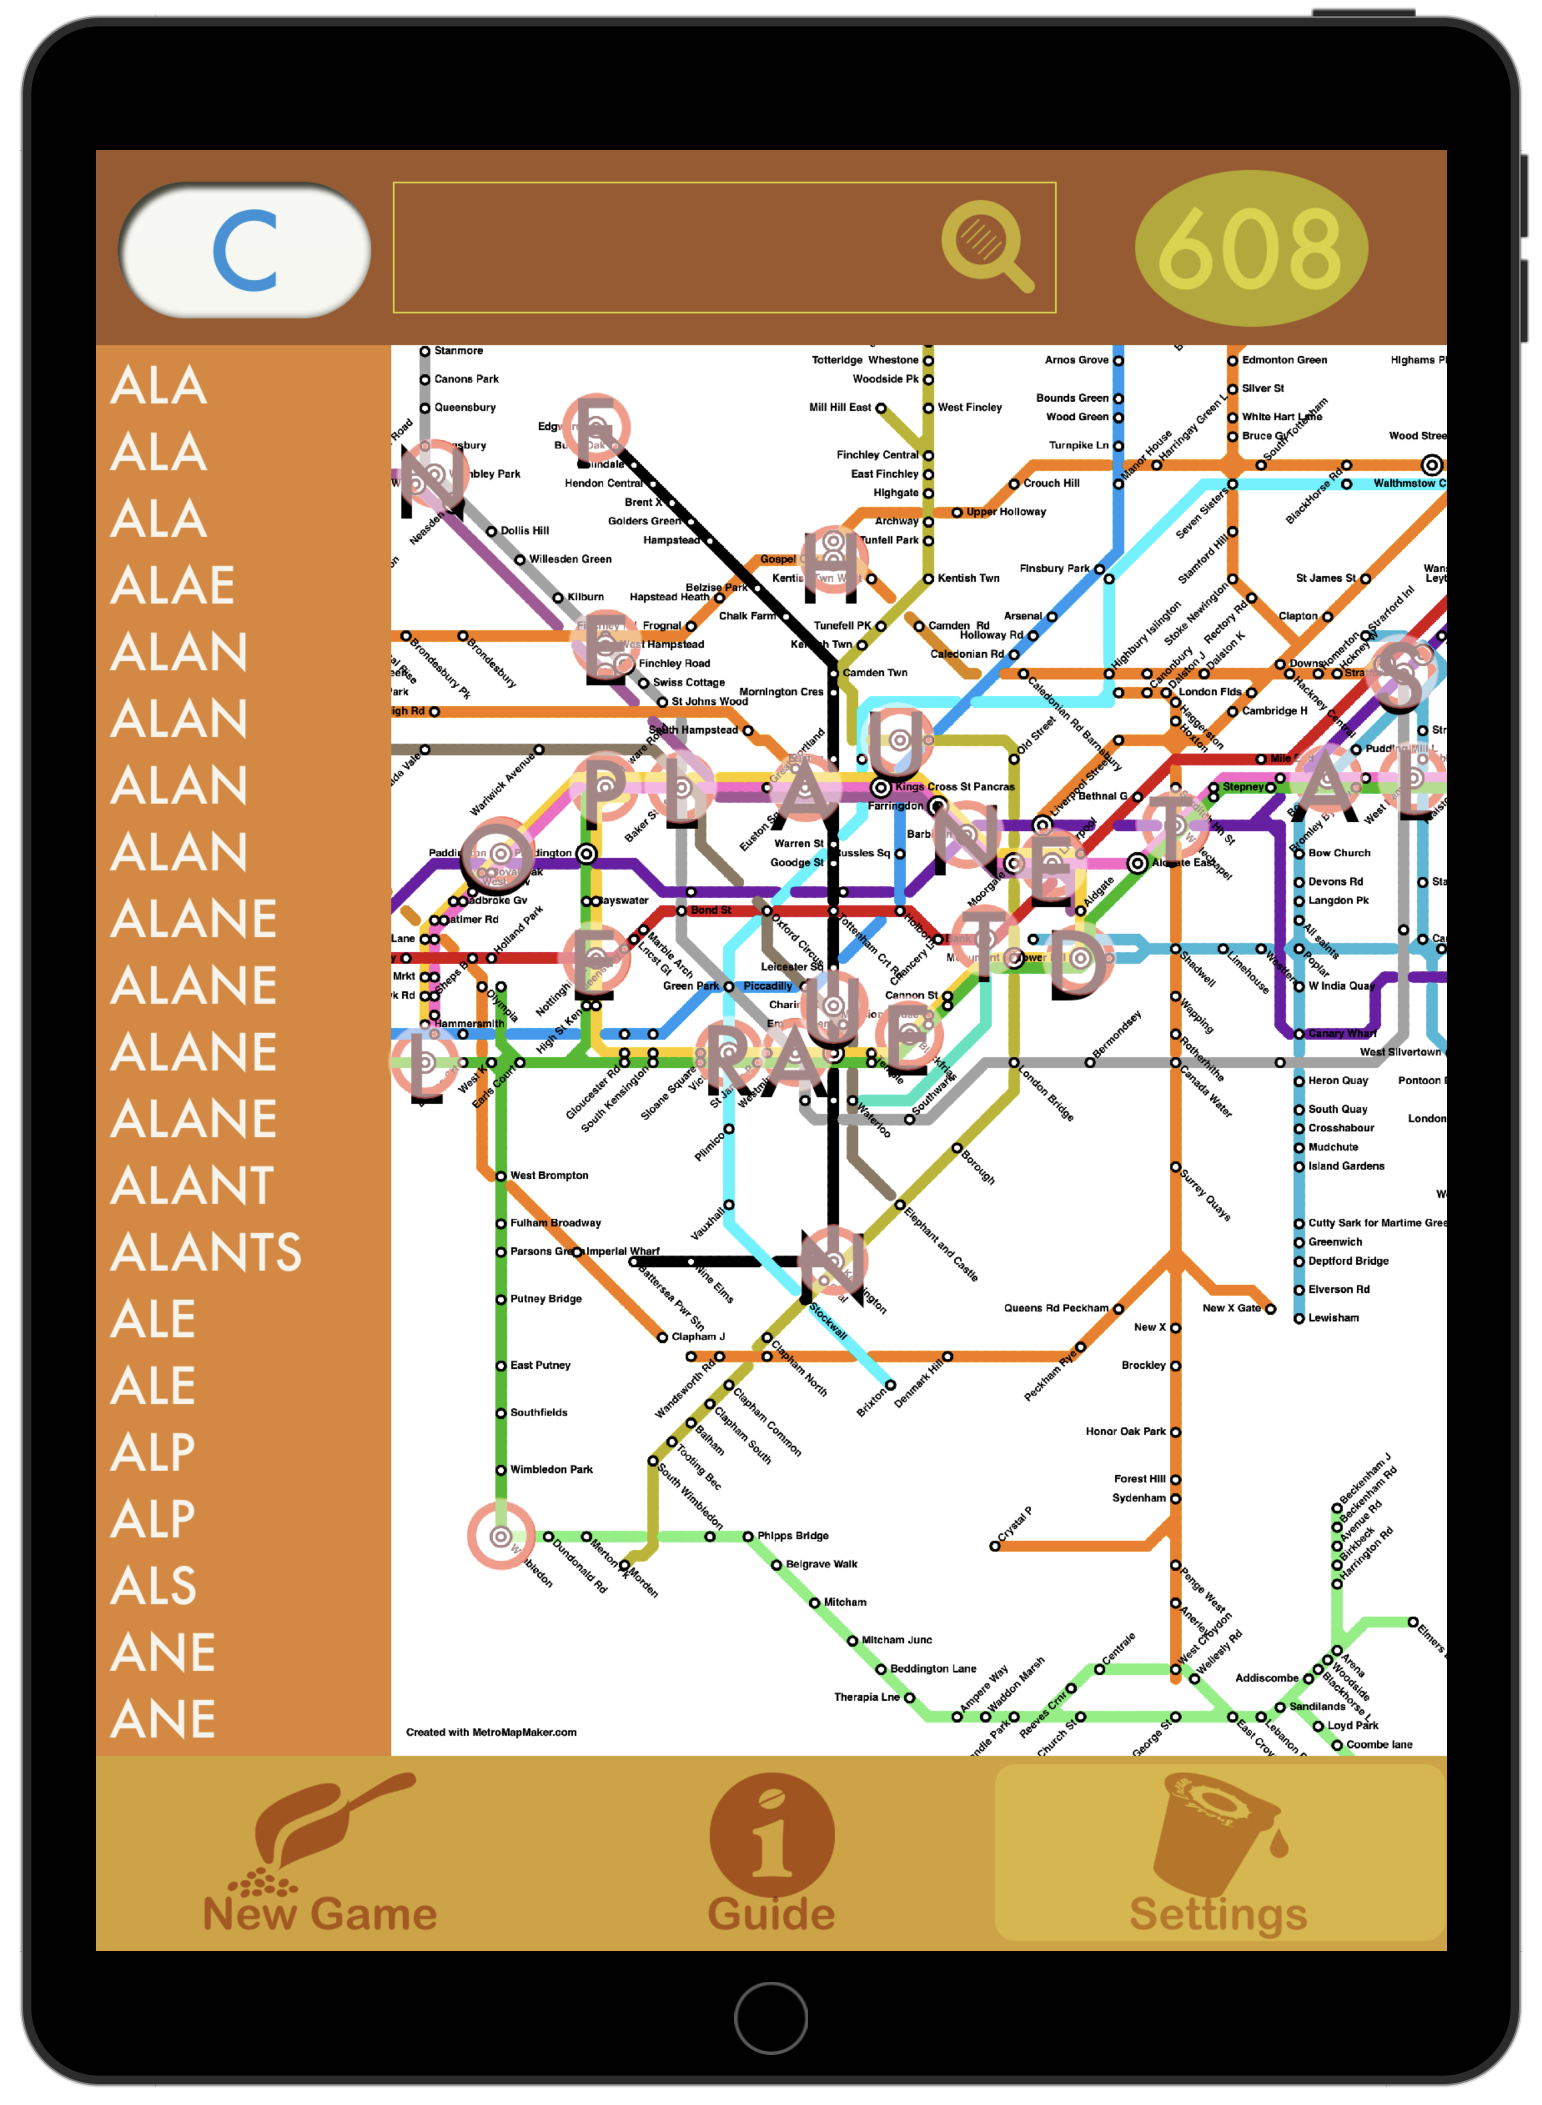 Screenshot of game played using London Tube system mockup